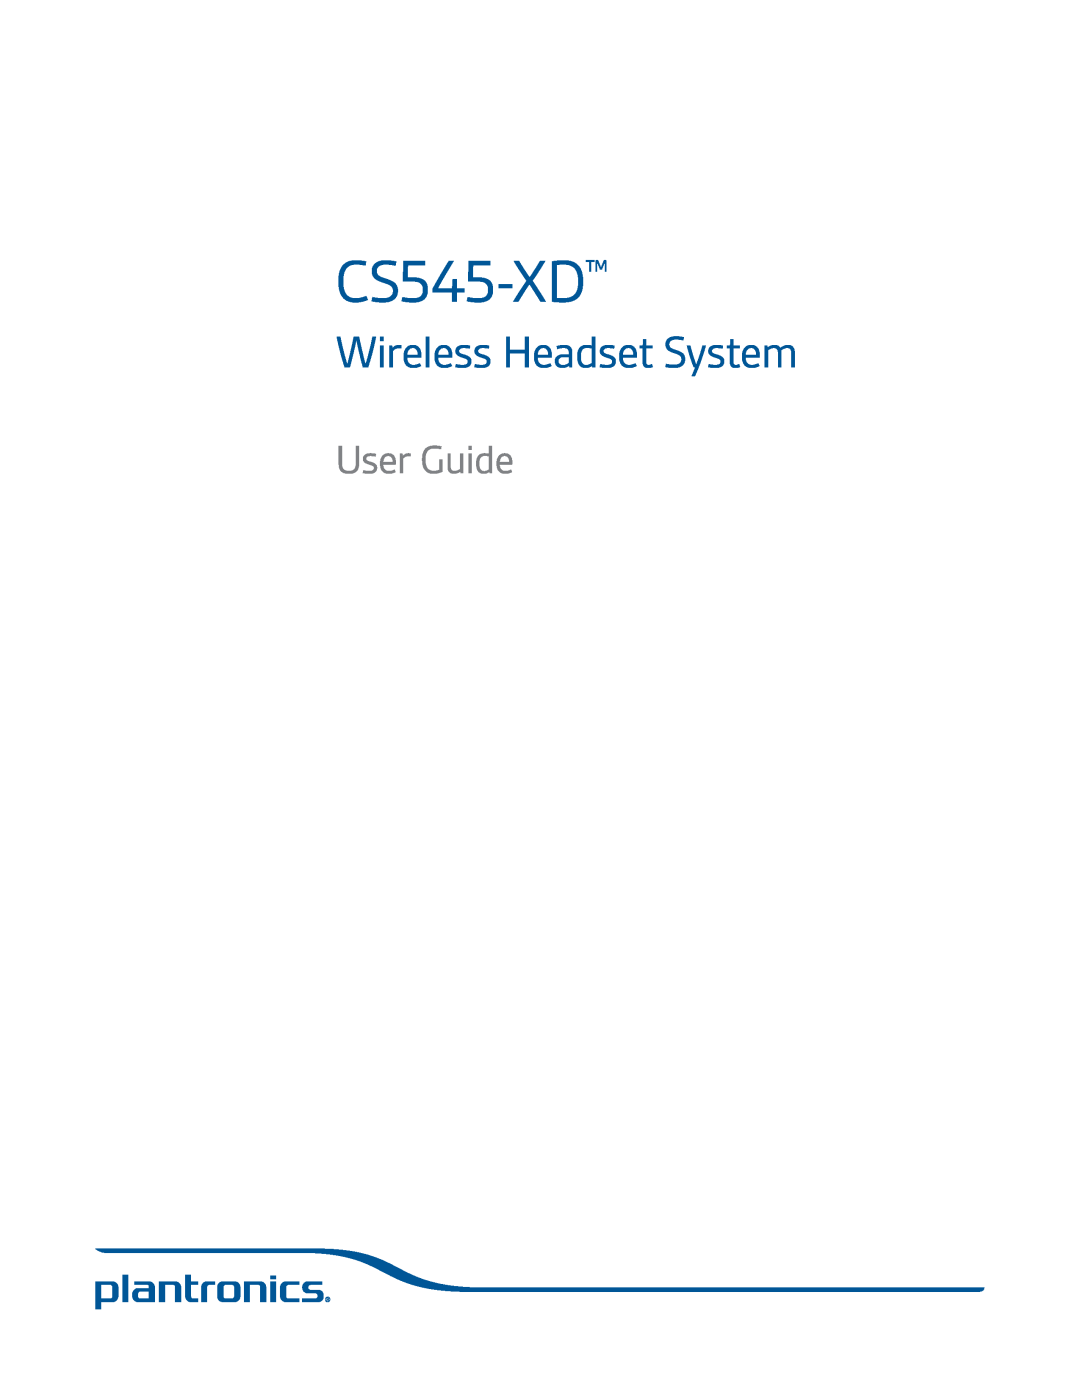 Plantronics CS545-XD manual Wireless Headset System, User Guide 